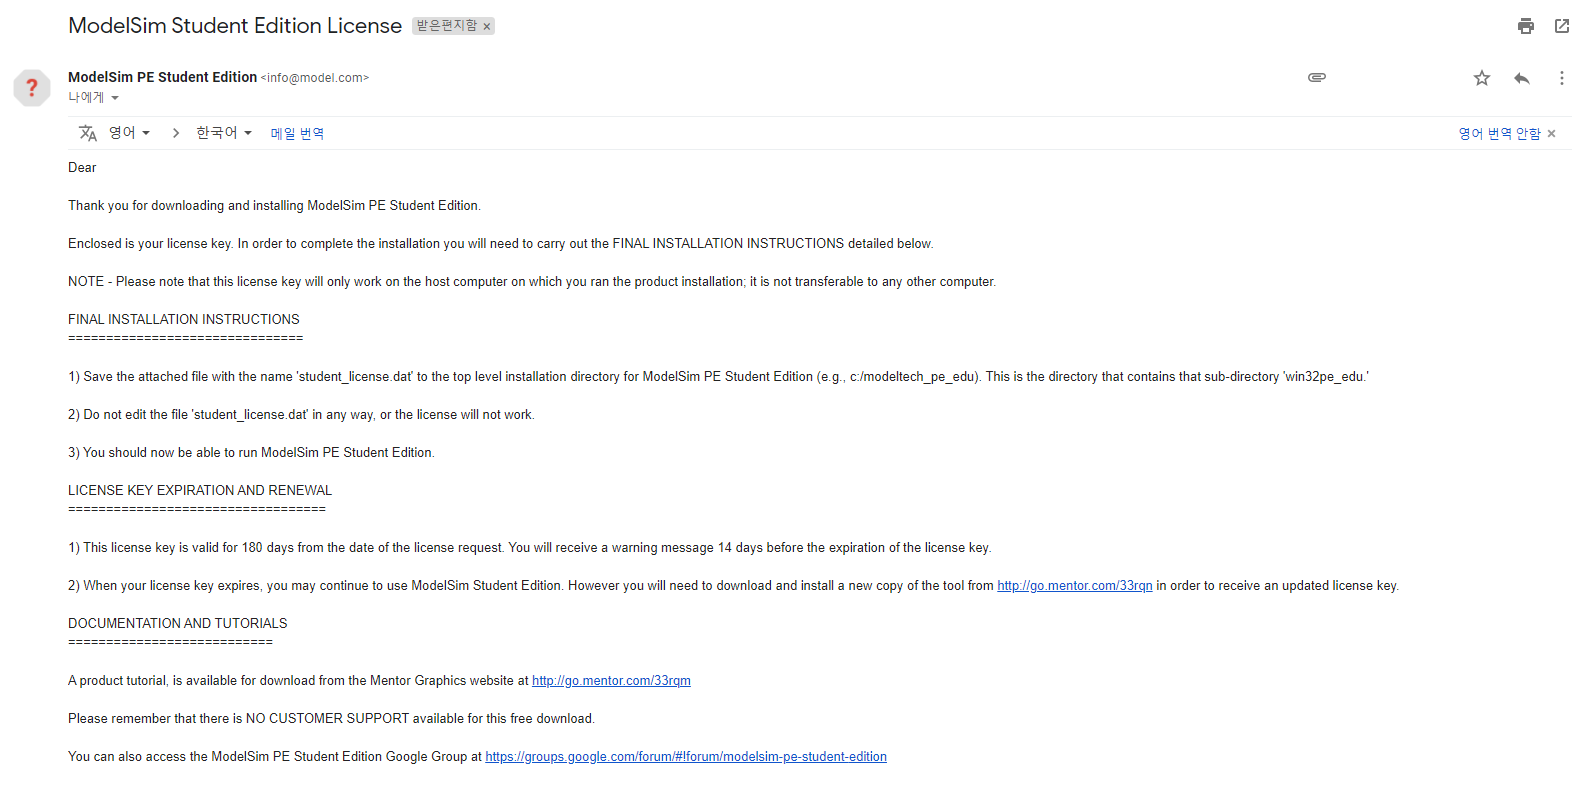 Email License Screenshot